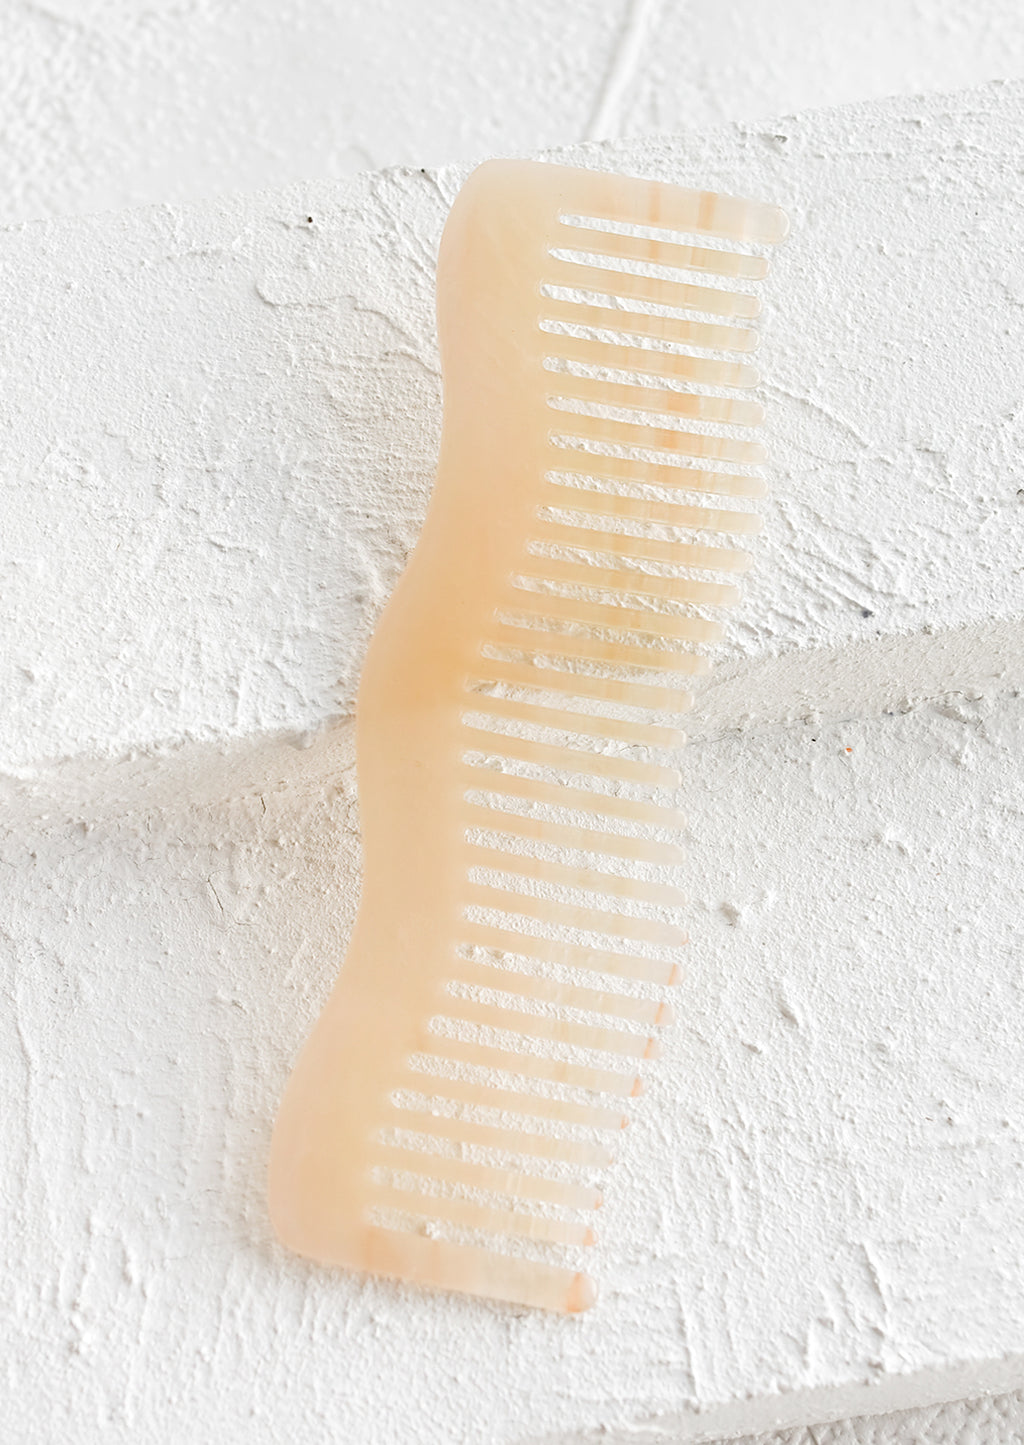 4: A wavy shaped acetate comb in peach.